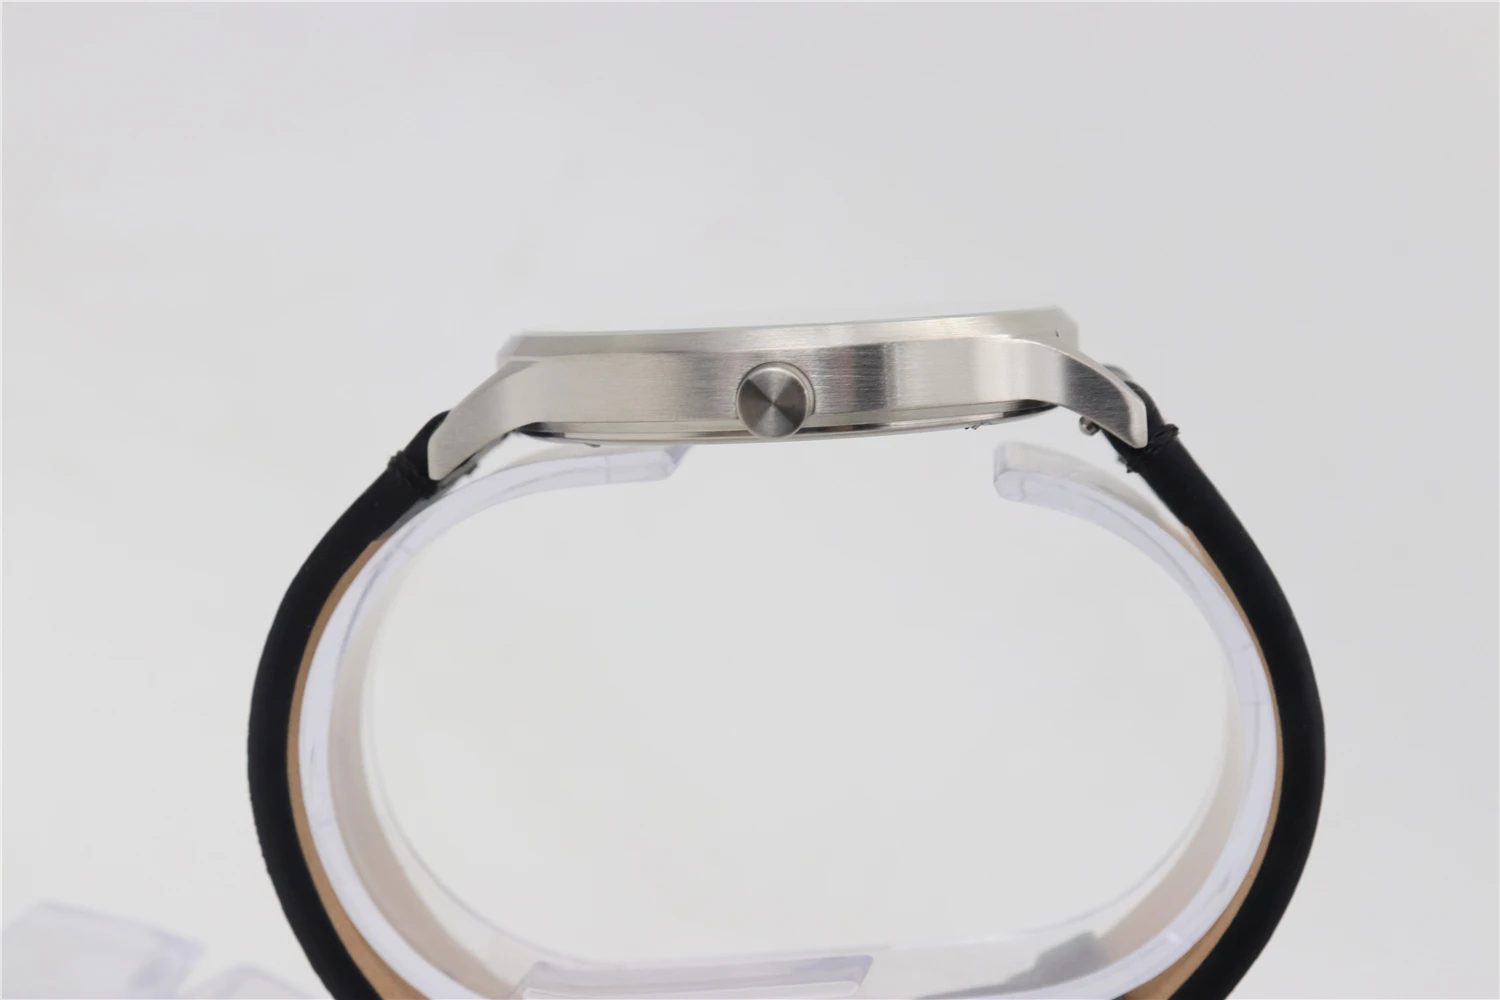 Interchangeable leather strap minimalist oem watches men wrist high quality